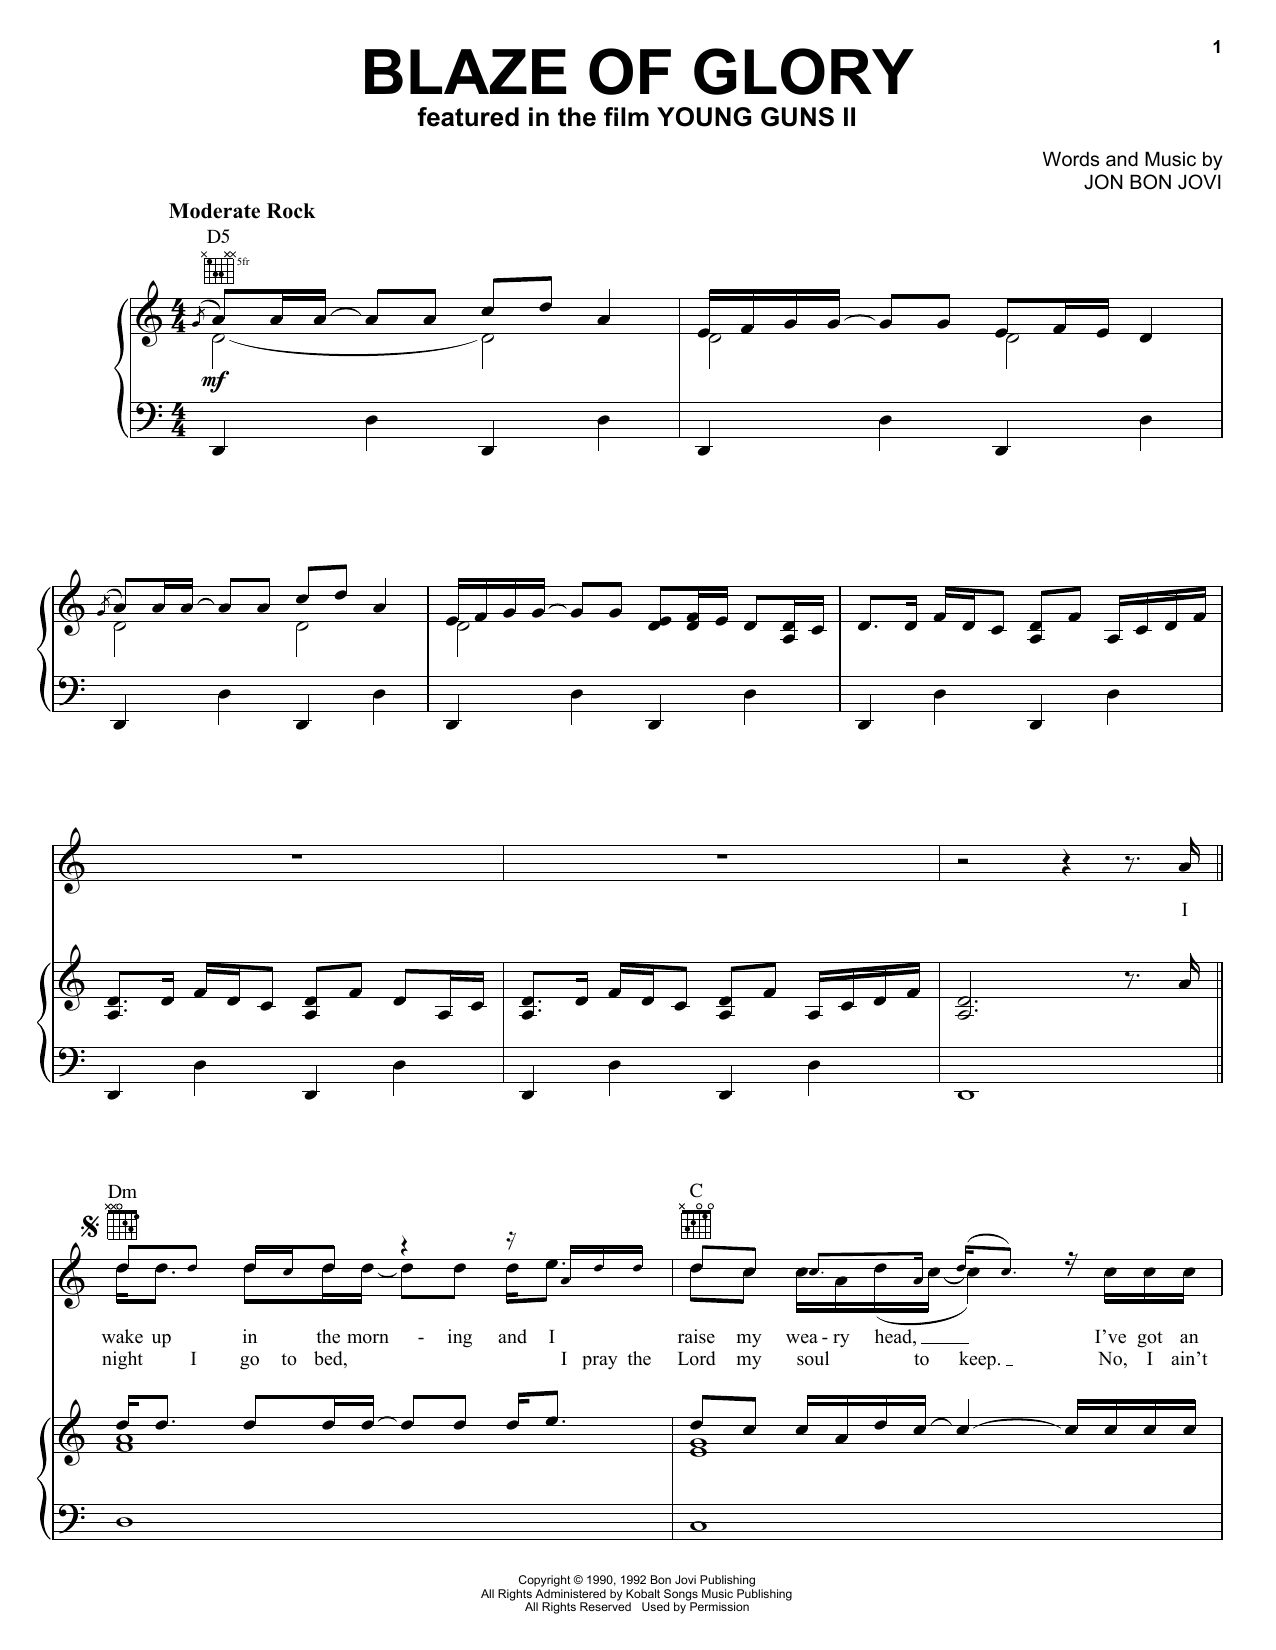 Jon Bon Jovi Blaze Of Glory Sheet Music Notes & Chords for Alto Saxophone - Download or Print PDF